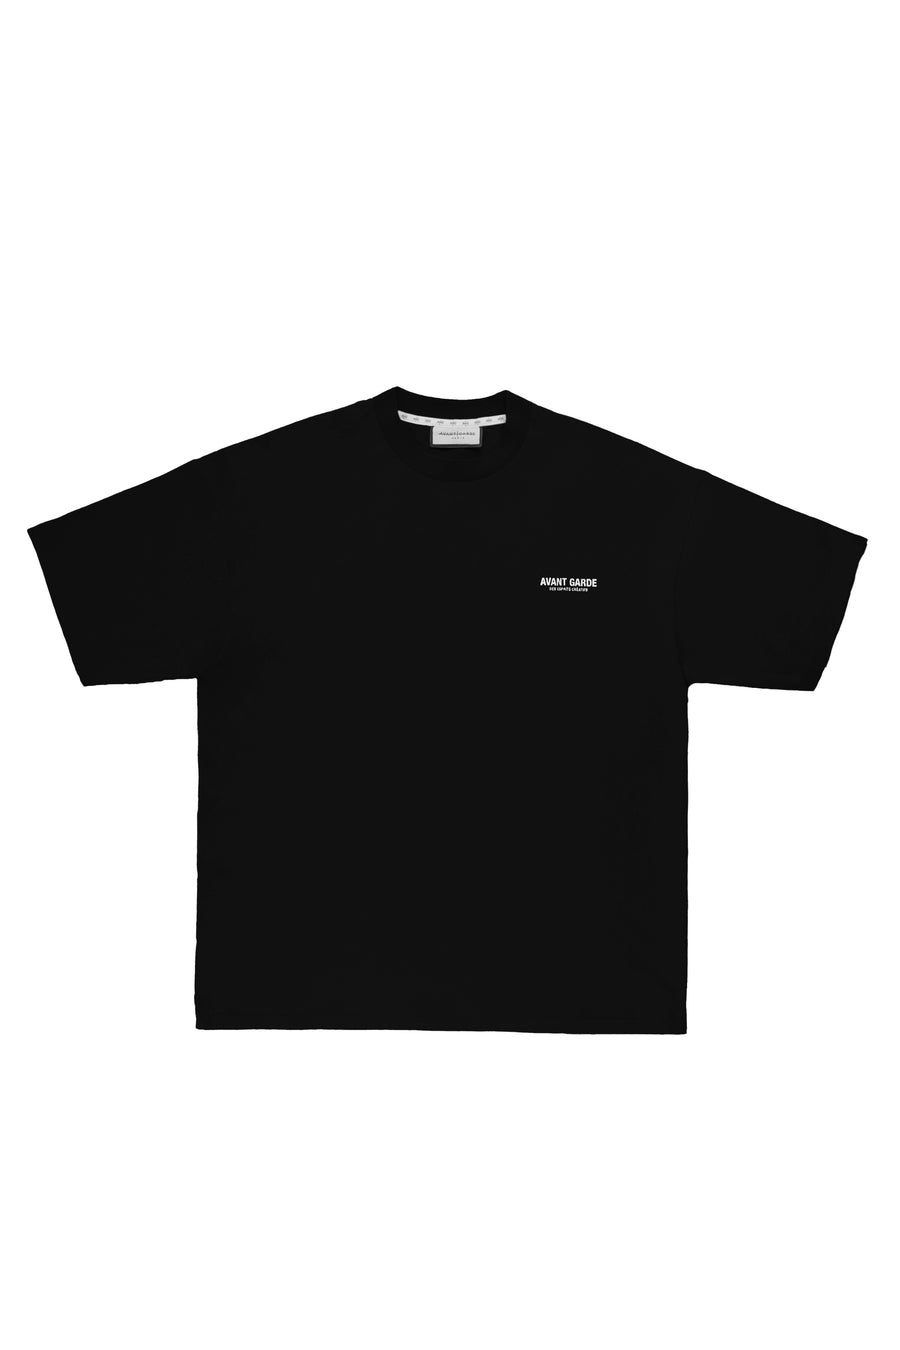 flatlay of a black branded tshirt (mens)